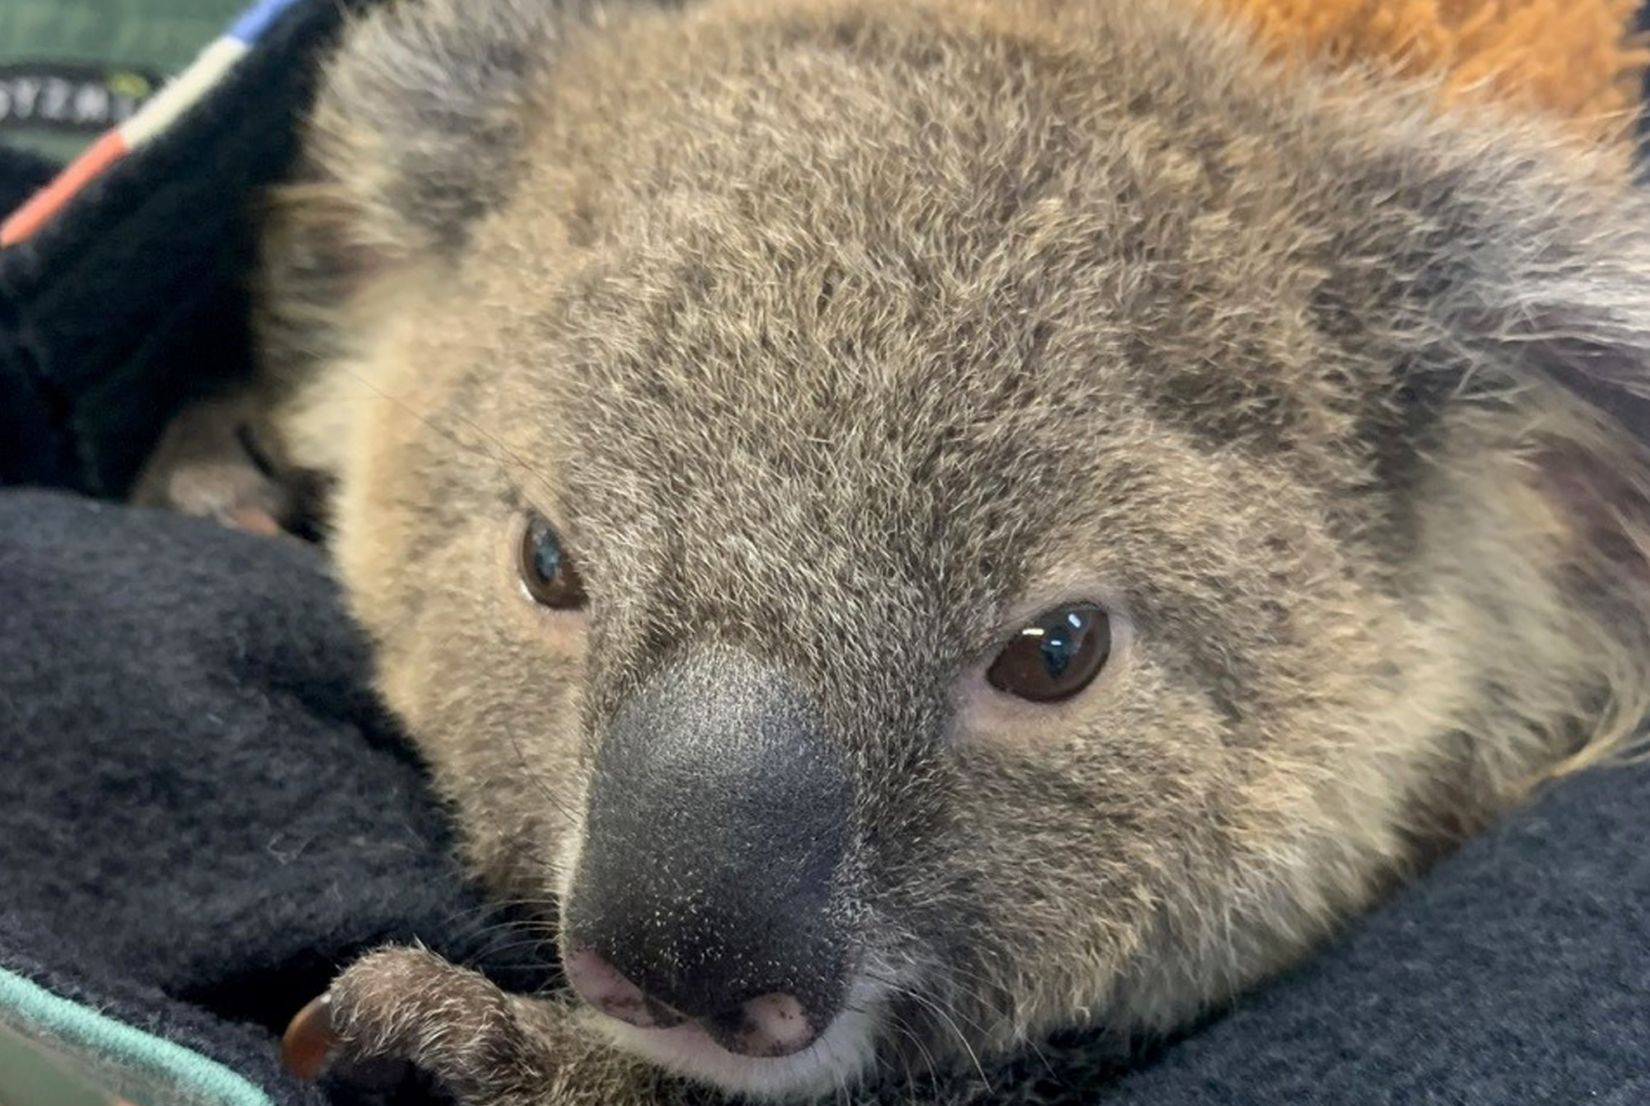 Just like kangaroos, baby koalas are called joeys